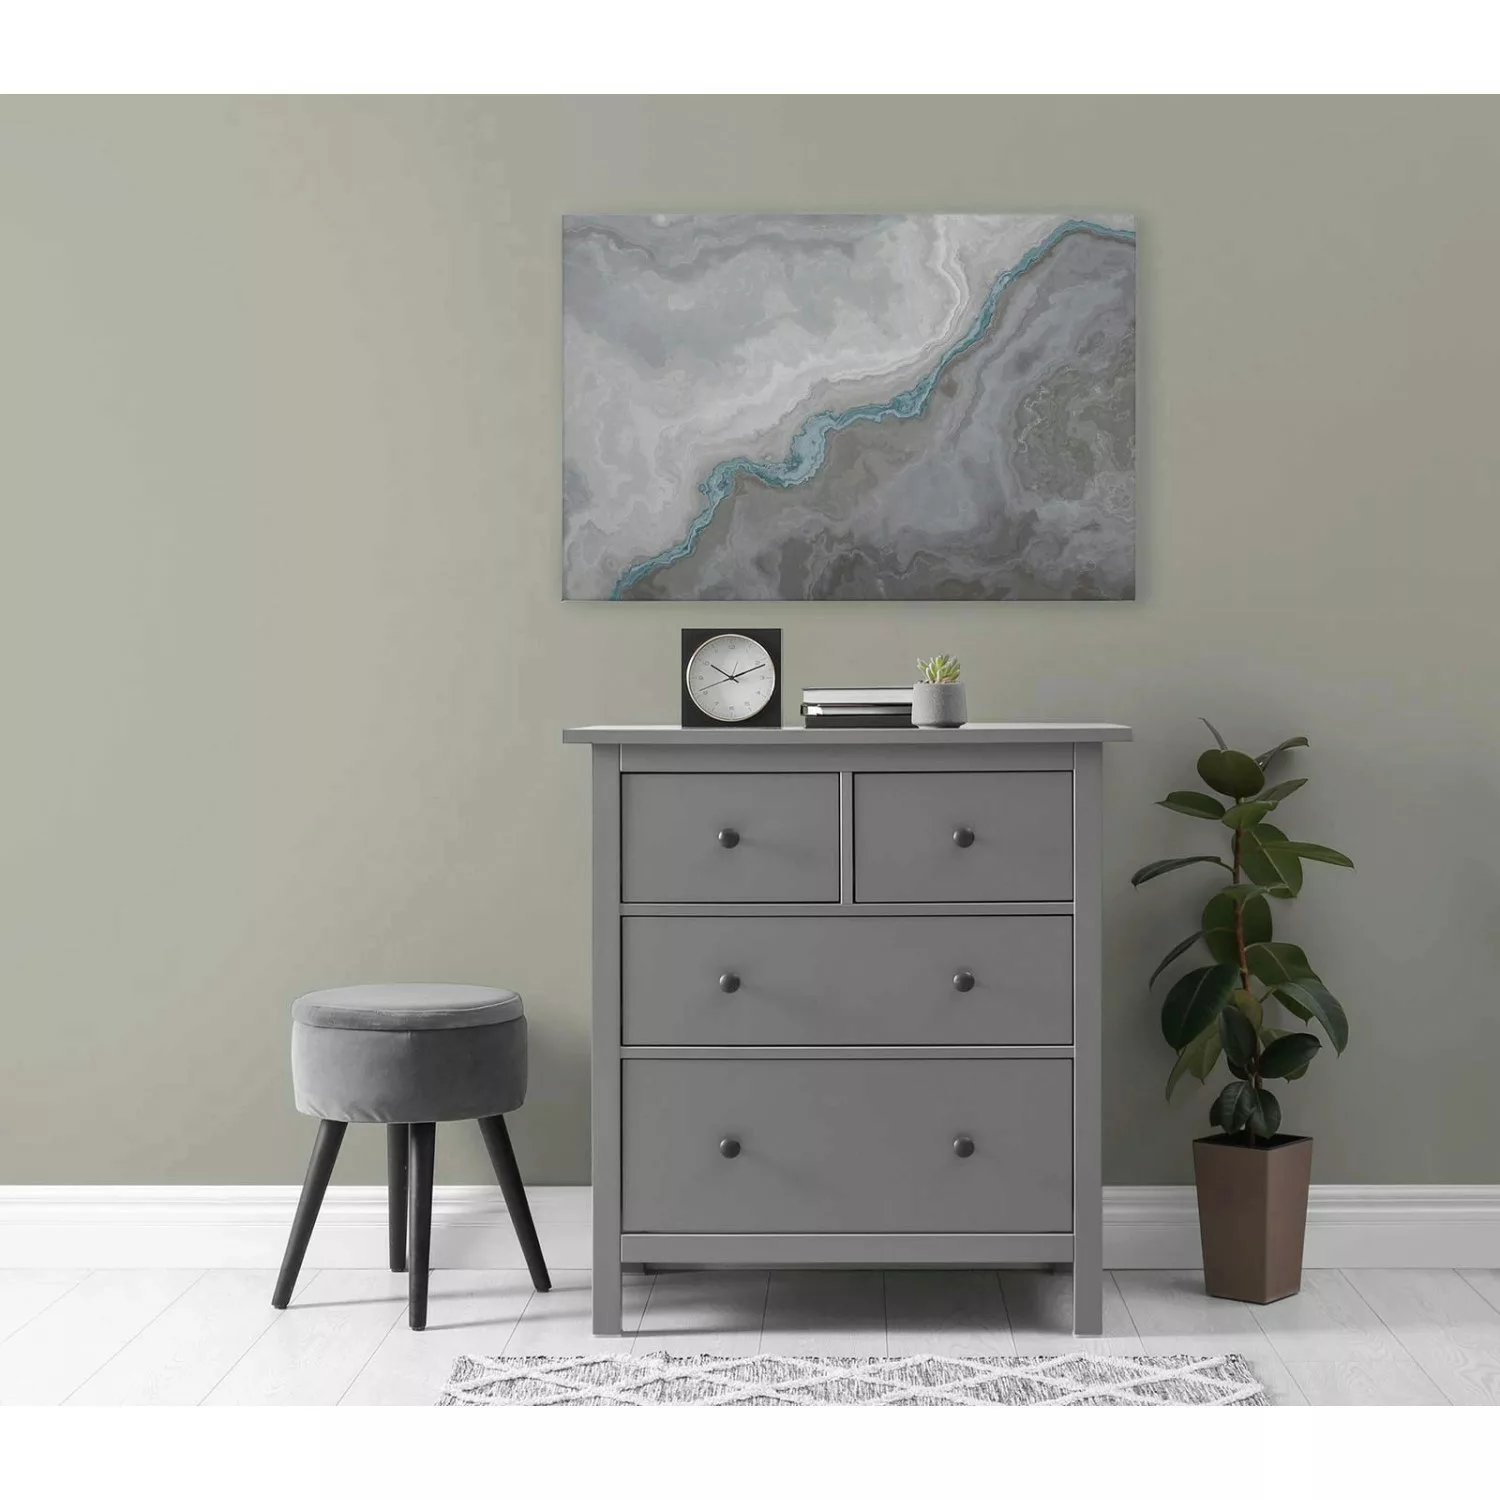 Bricoflor Marmor Bild Blau Grau Leinwandbild In Quarz Optik Für Badezimmer günstig online kaufen